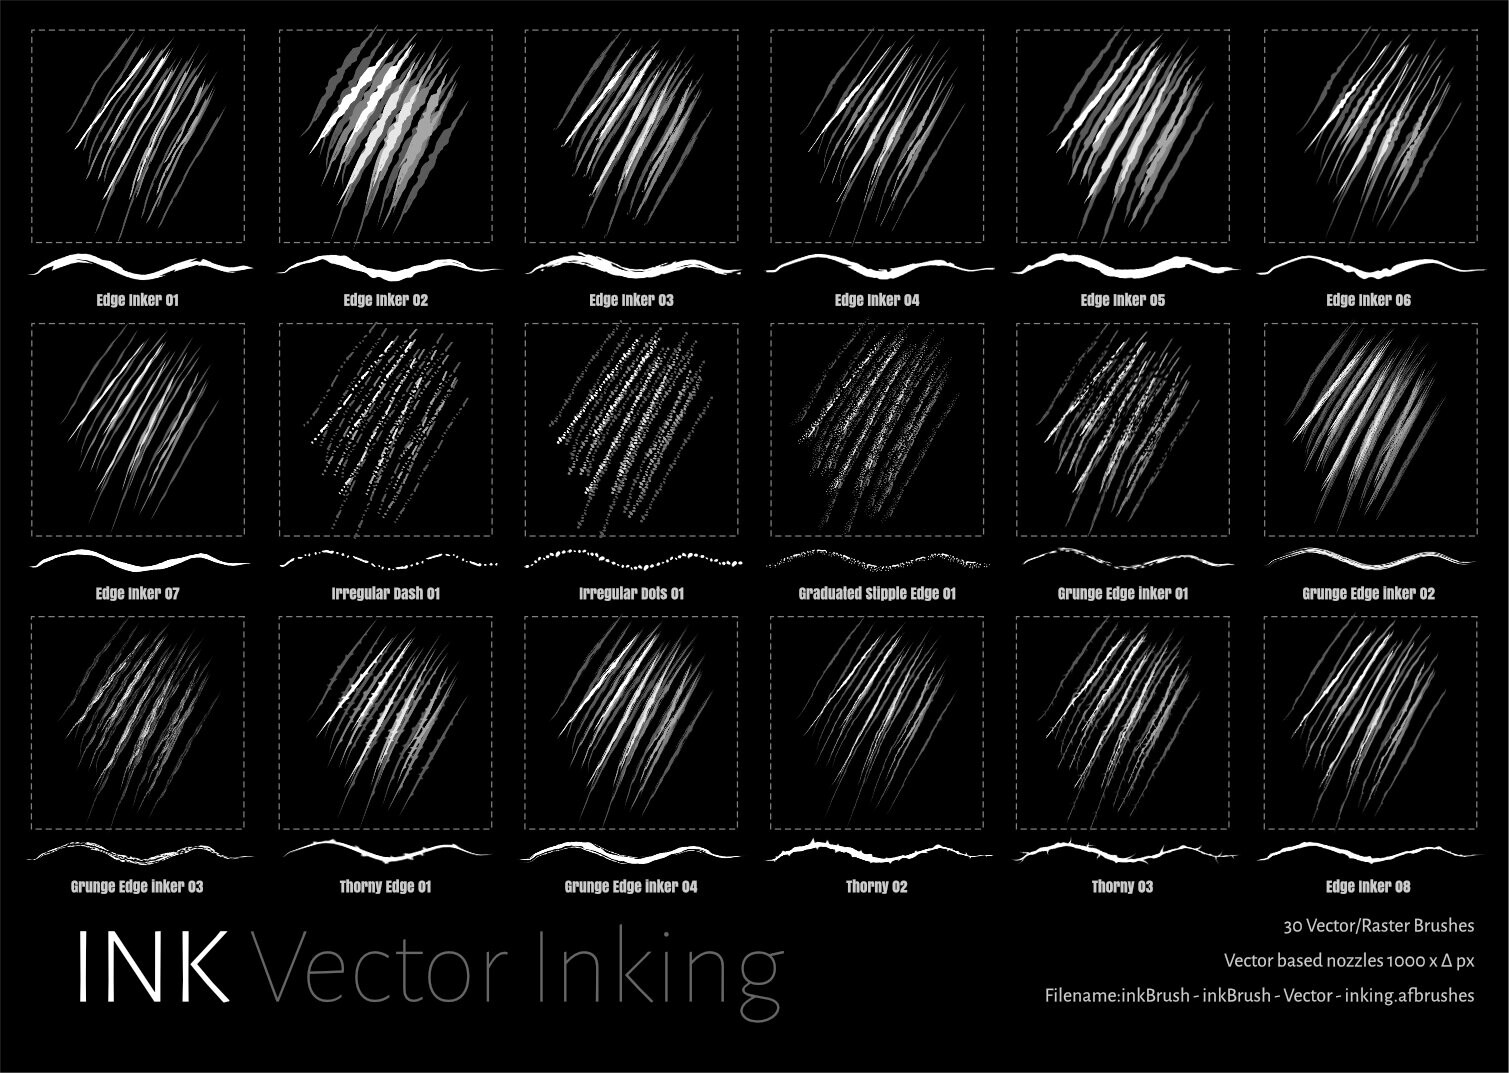 Vector Brush
Project Brush 07 inkBrush: Inking 01